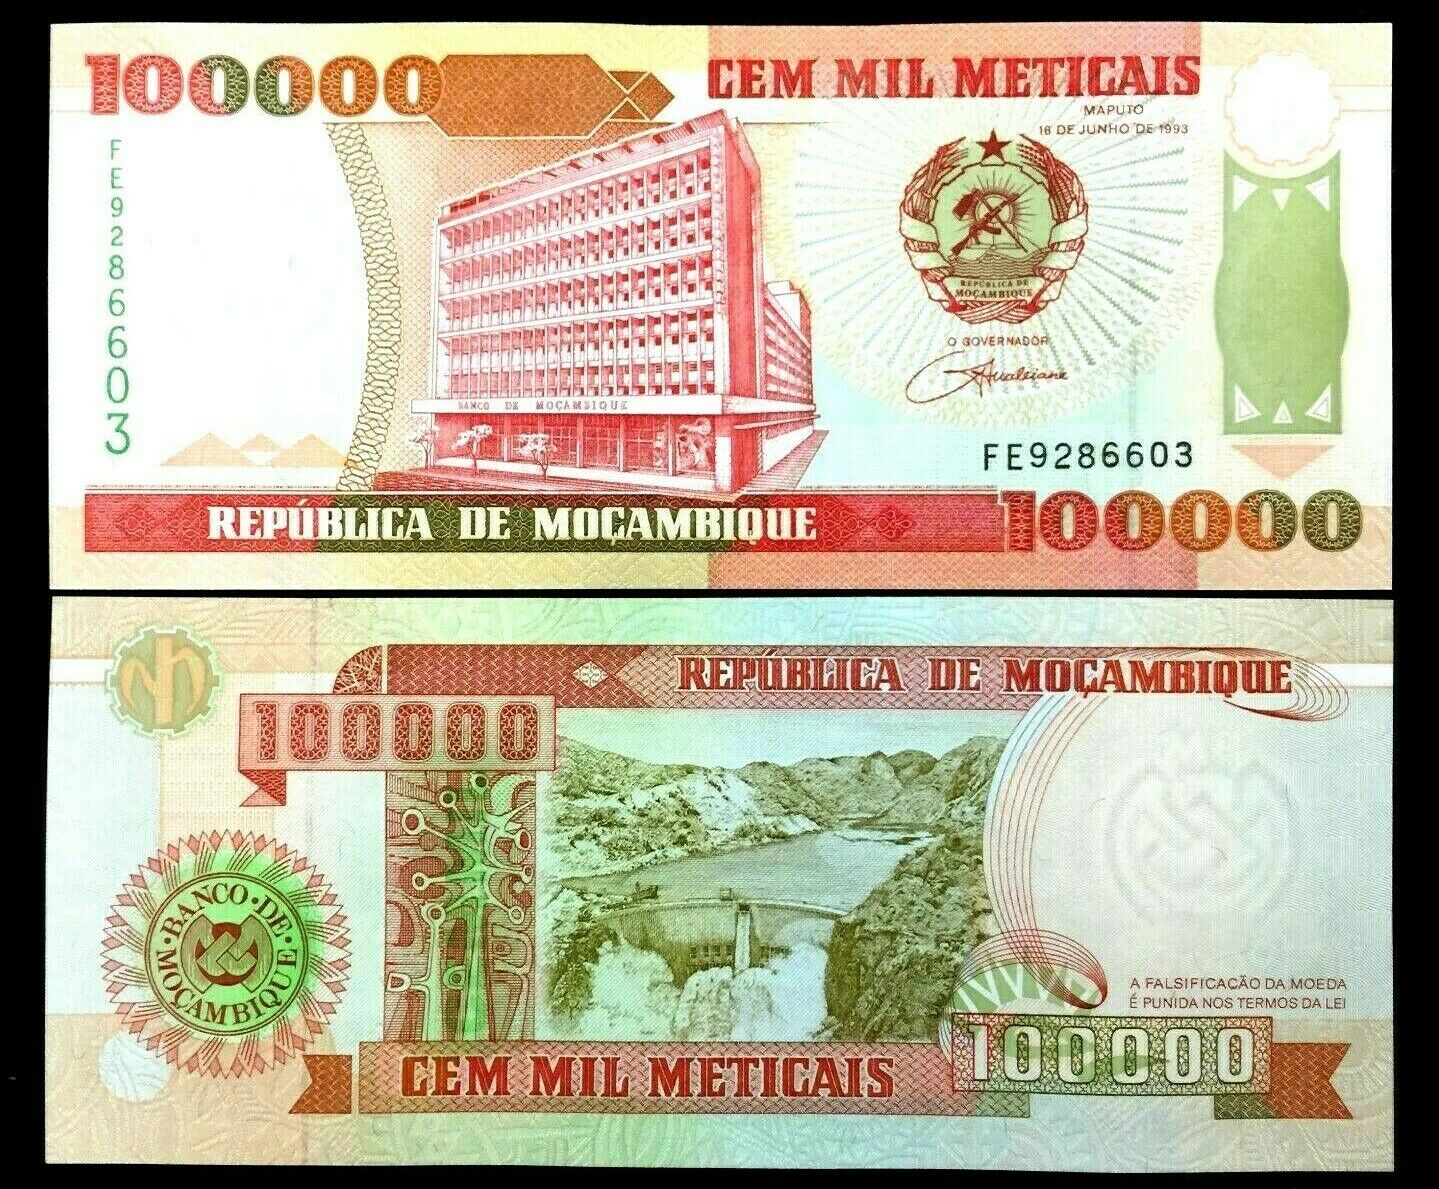 MOZAMBIQUE 100,000 METICAIS Banknote World Paper Money UNC Bill Note